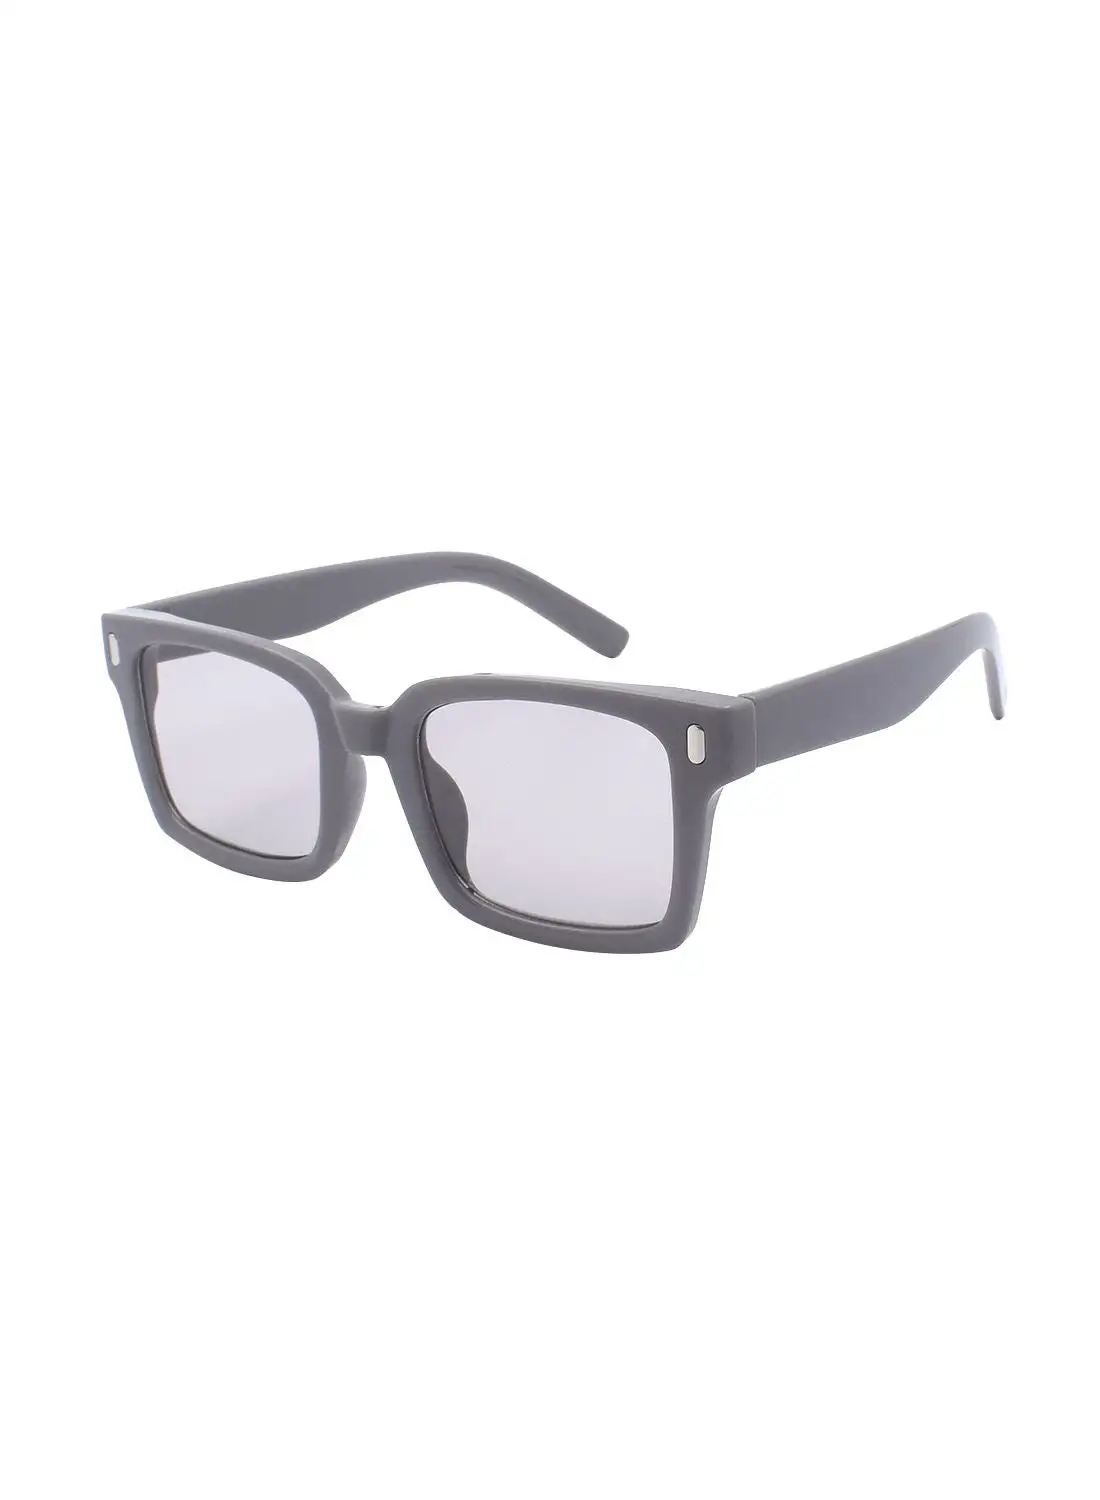 MADEYES Rectangular Sunglasses EE20X063-4